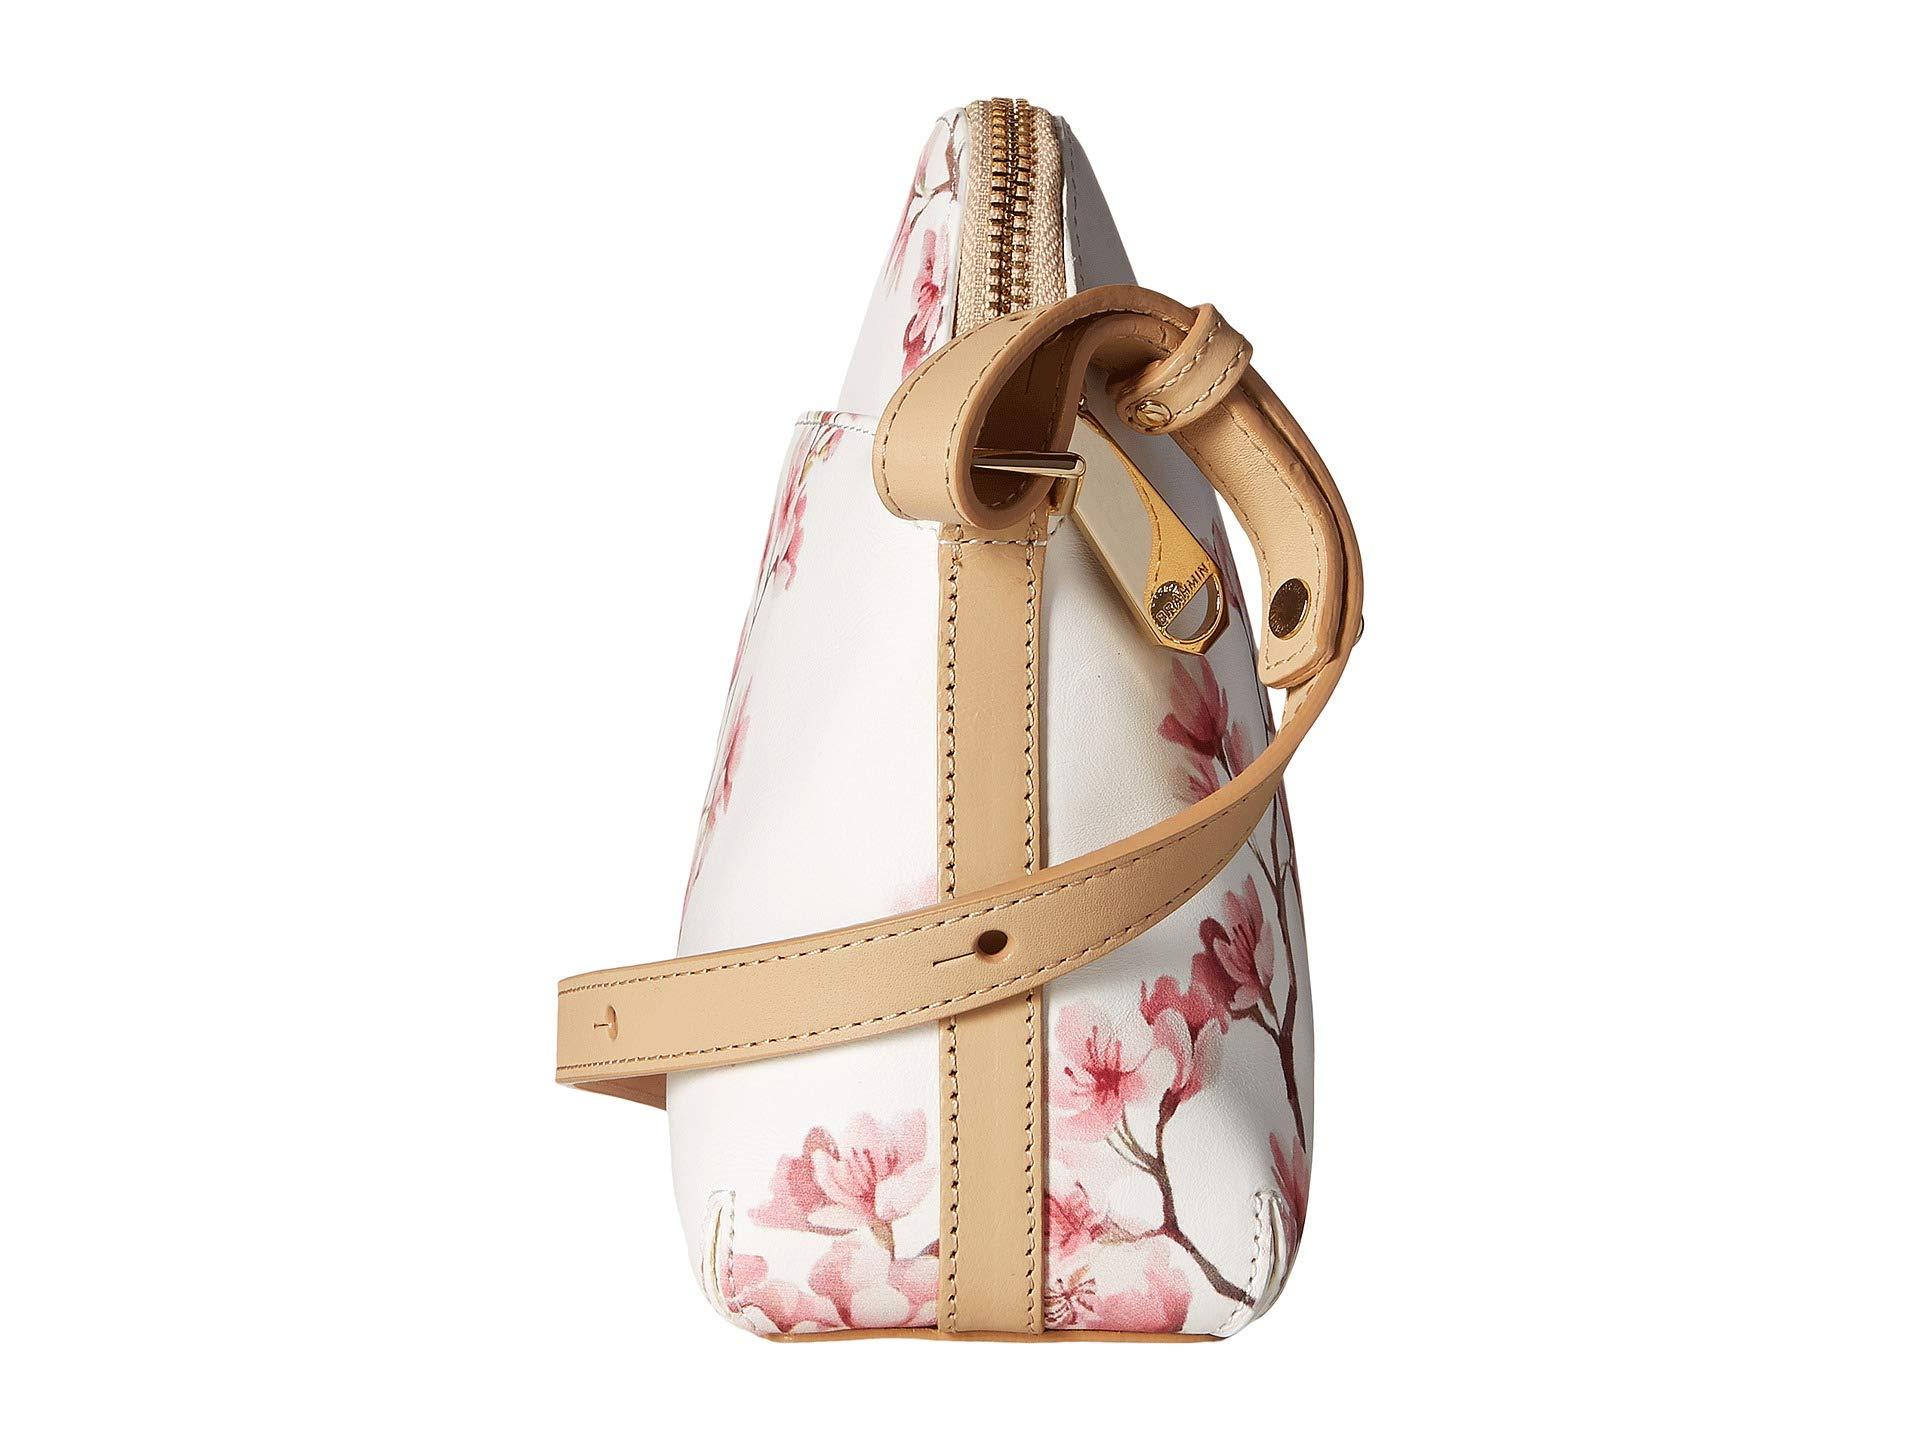 Lyst - Brahmin Melbourne Mini Sydney Crossbody Bag (blossom) Handbags